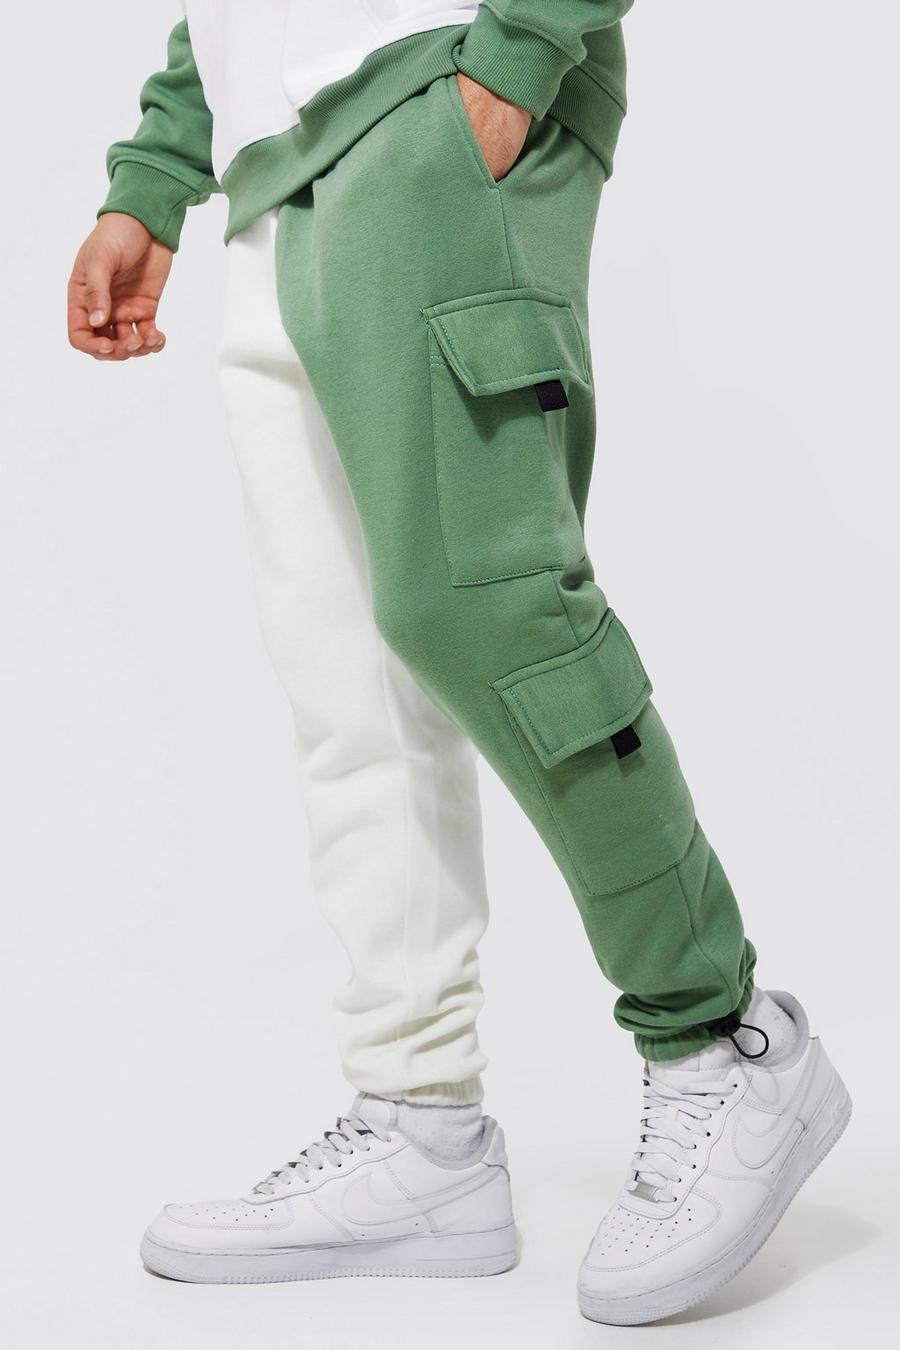 Pantaloni tuta Cargo Slim Fit stile Utility effetto patchwork, Sage gerde